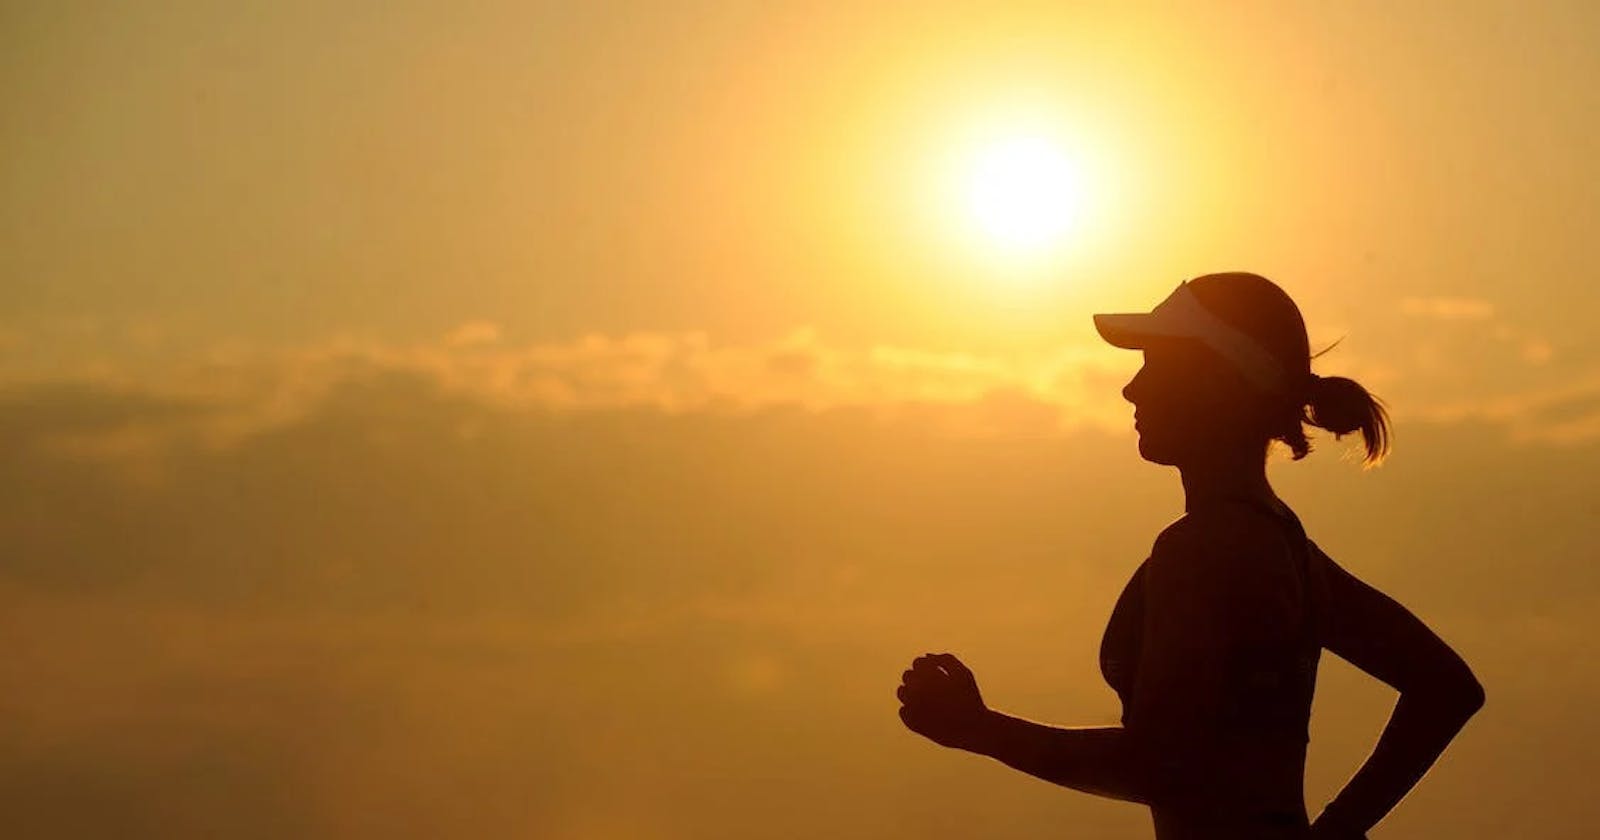 10 Benefits of Running That Will Make You Run Starting Today